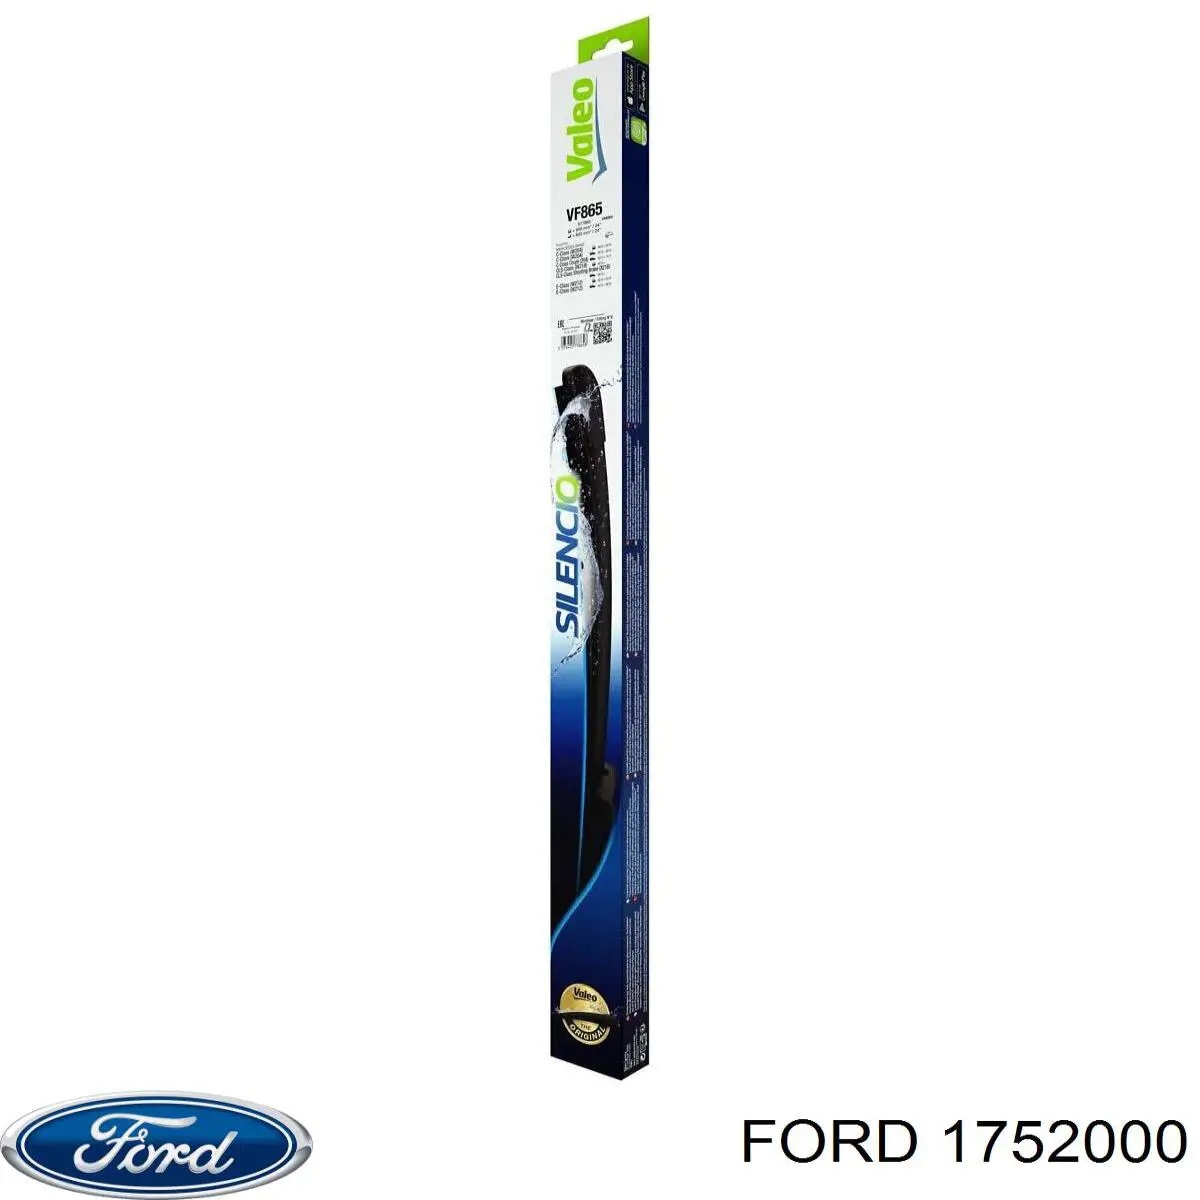 1866213 Ford limpiaparabrisas